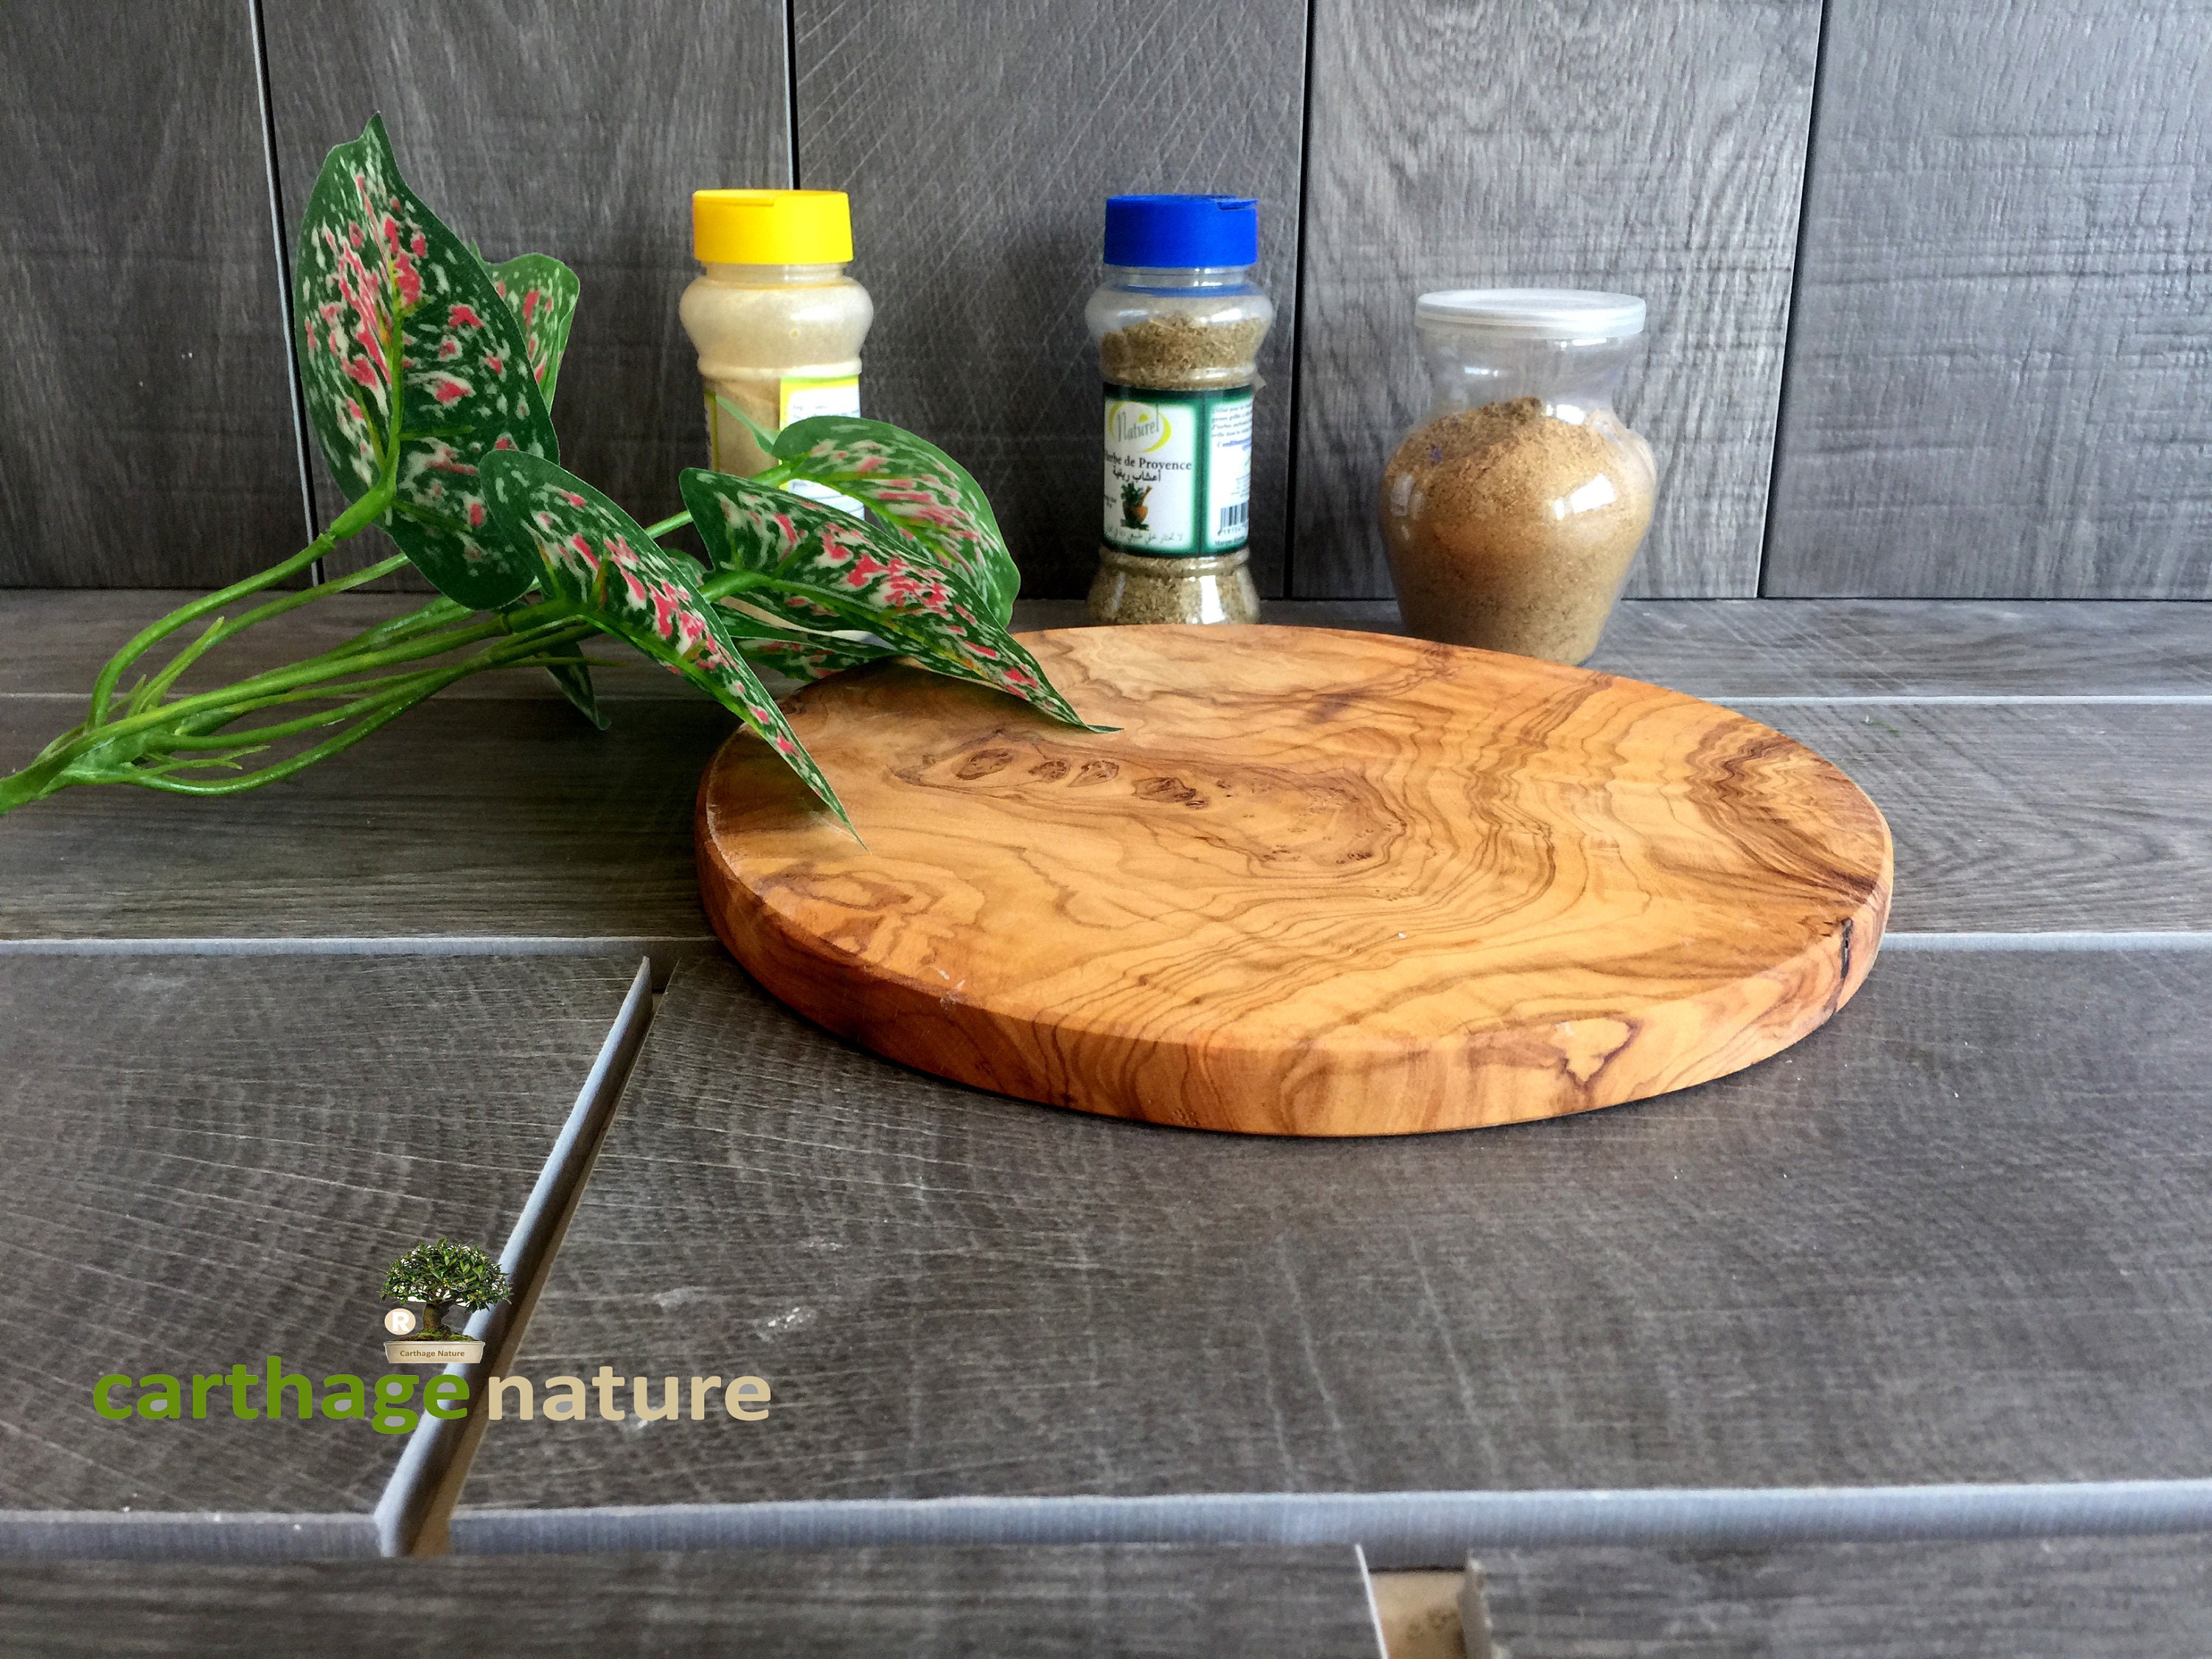 Cutting board Collection with a natural wood - Qartaj